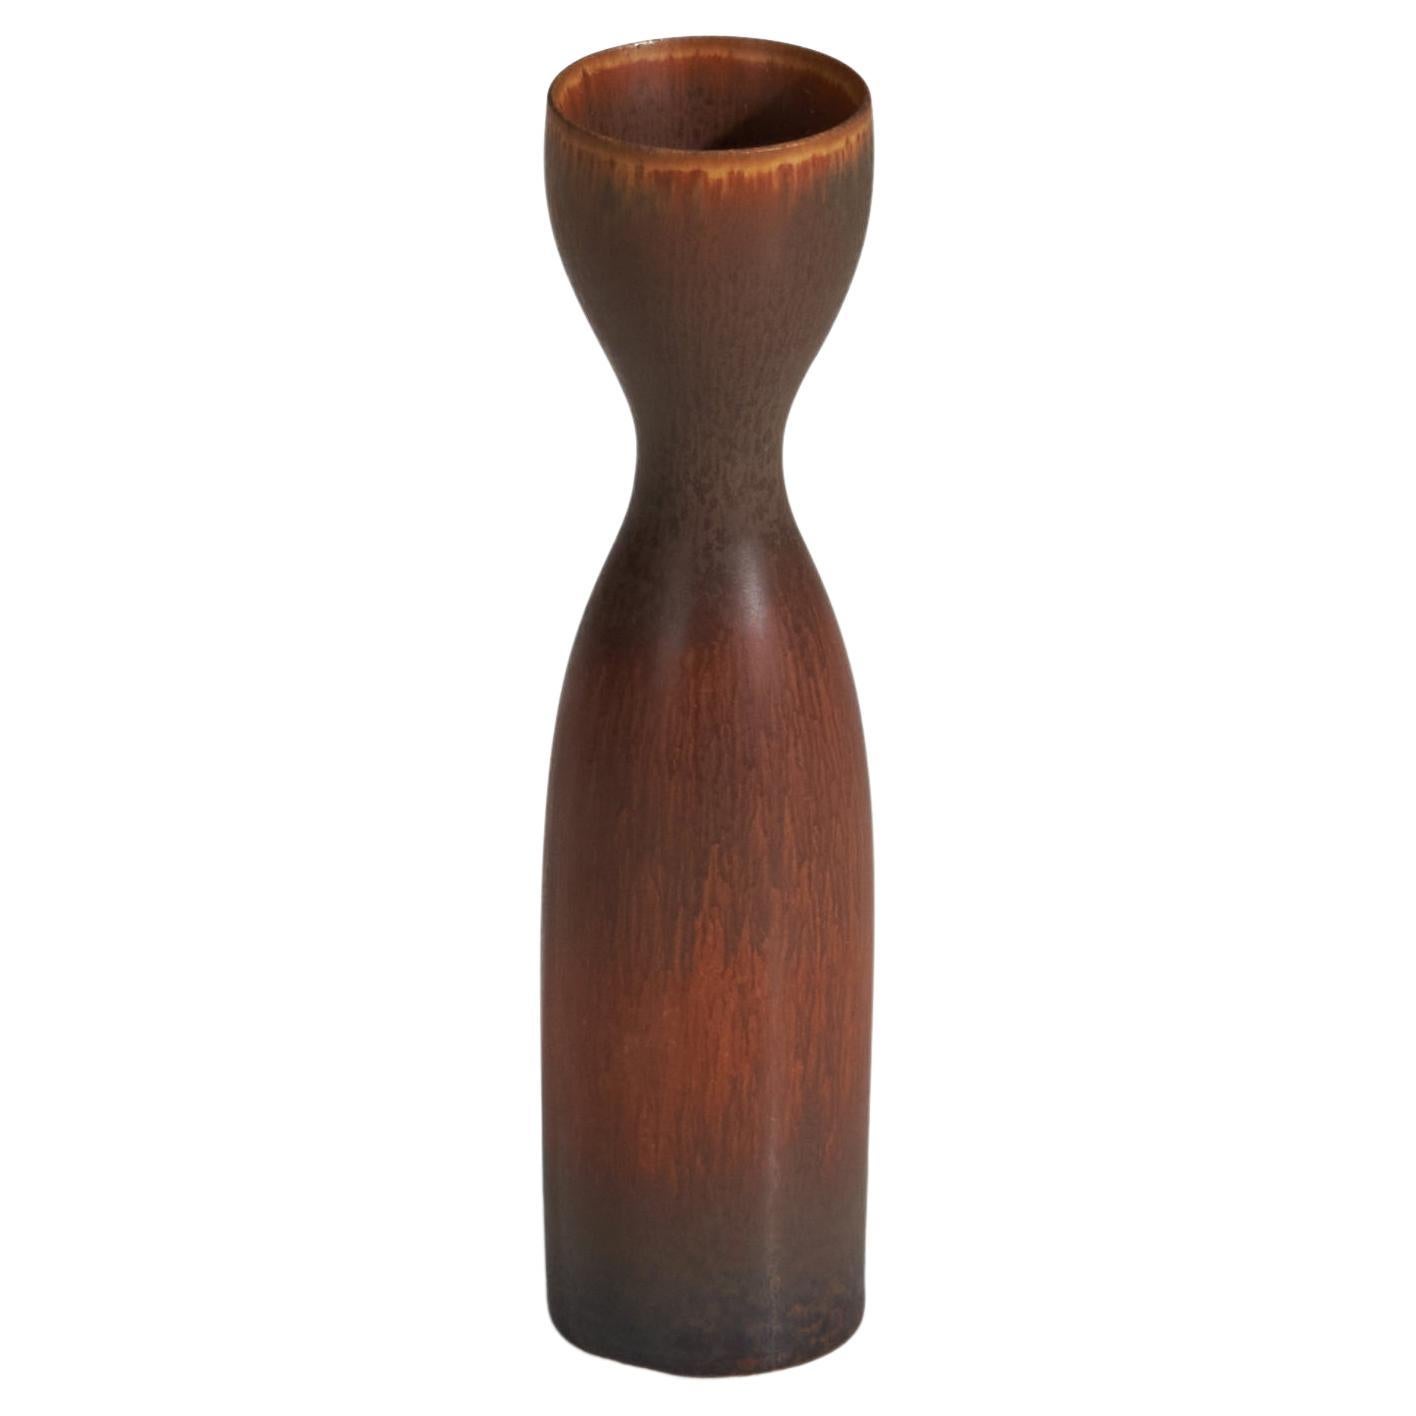 Carl-Harry Stålhane, Vase, Brown Glazed Stoneware, Rörstrand, Sweden, 1960s